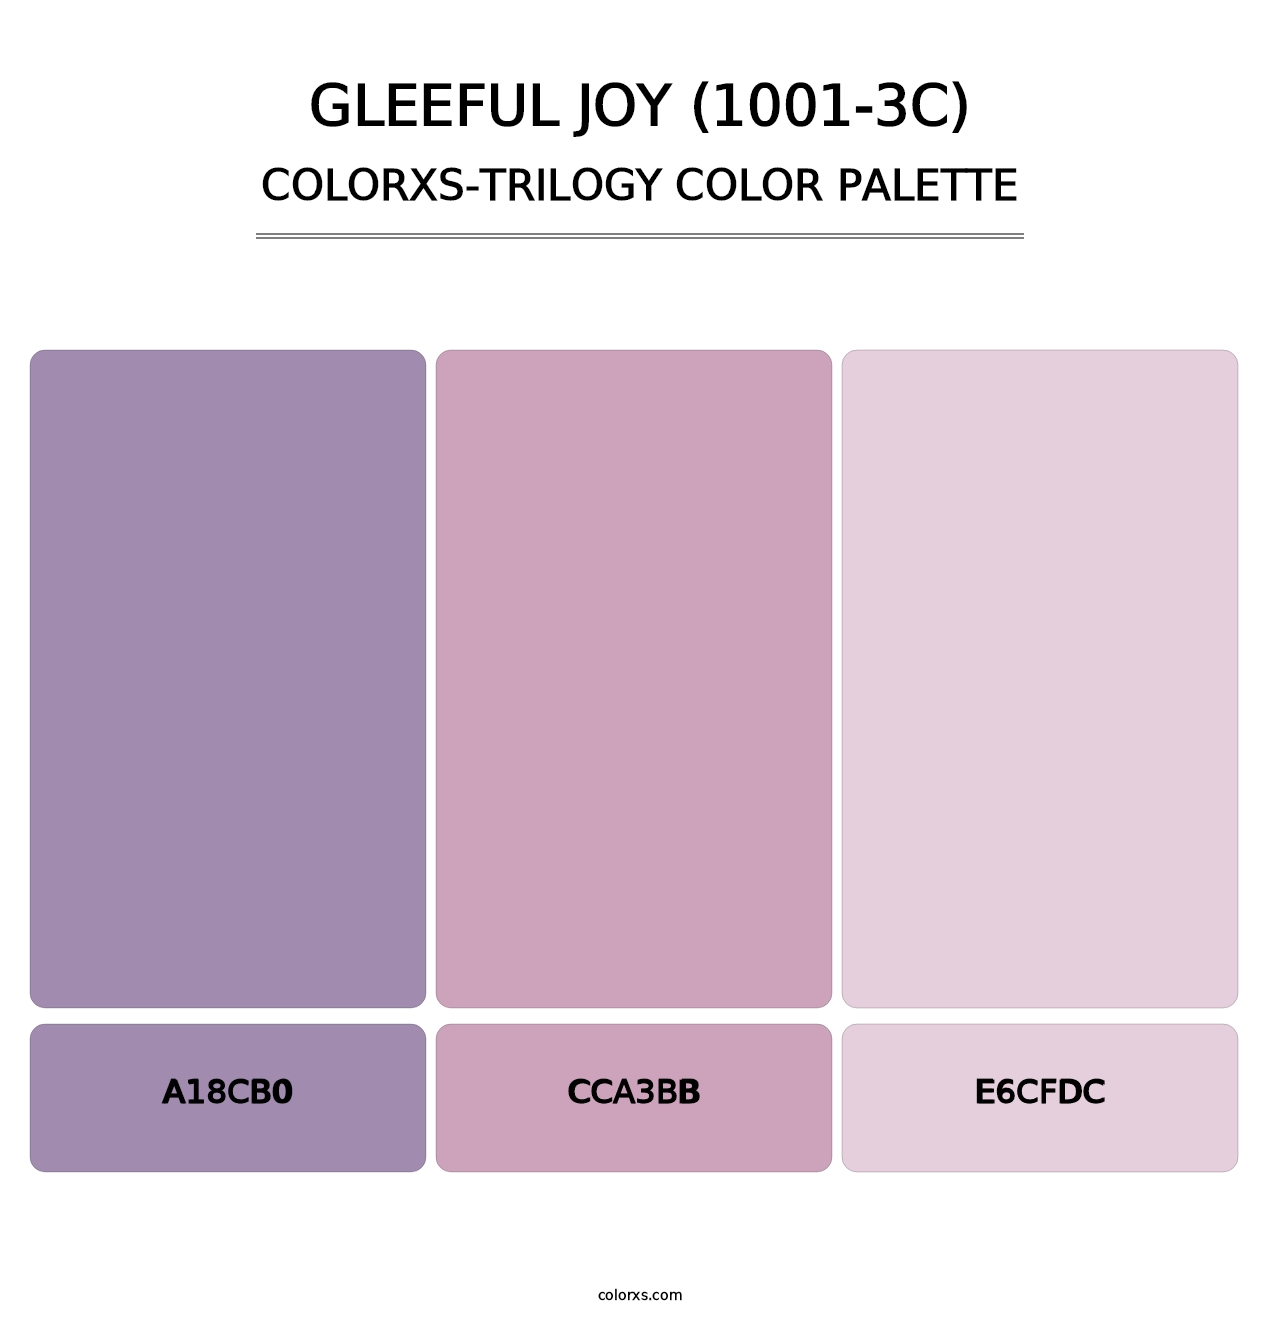 Gleeful Joy (1001-3C) - Colorxs Trilogy Palette